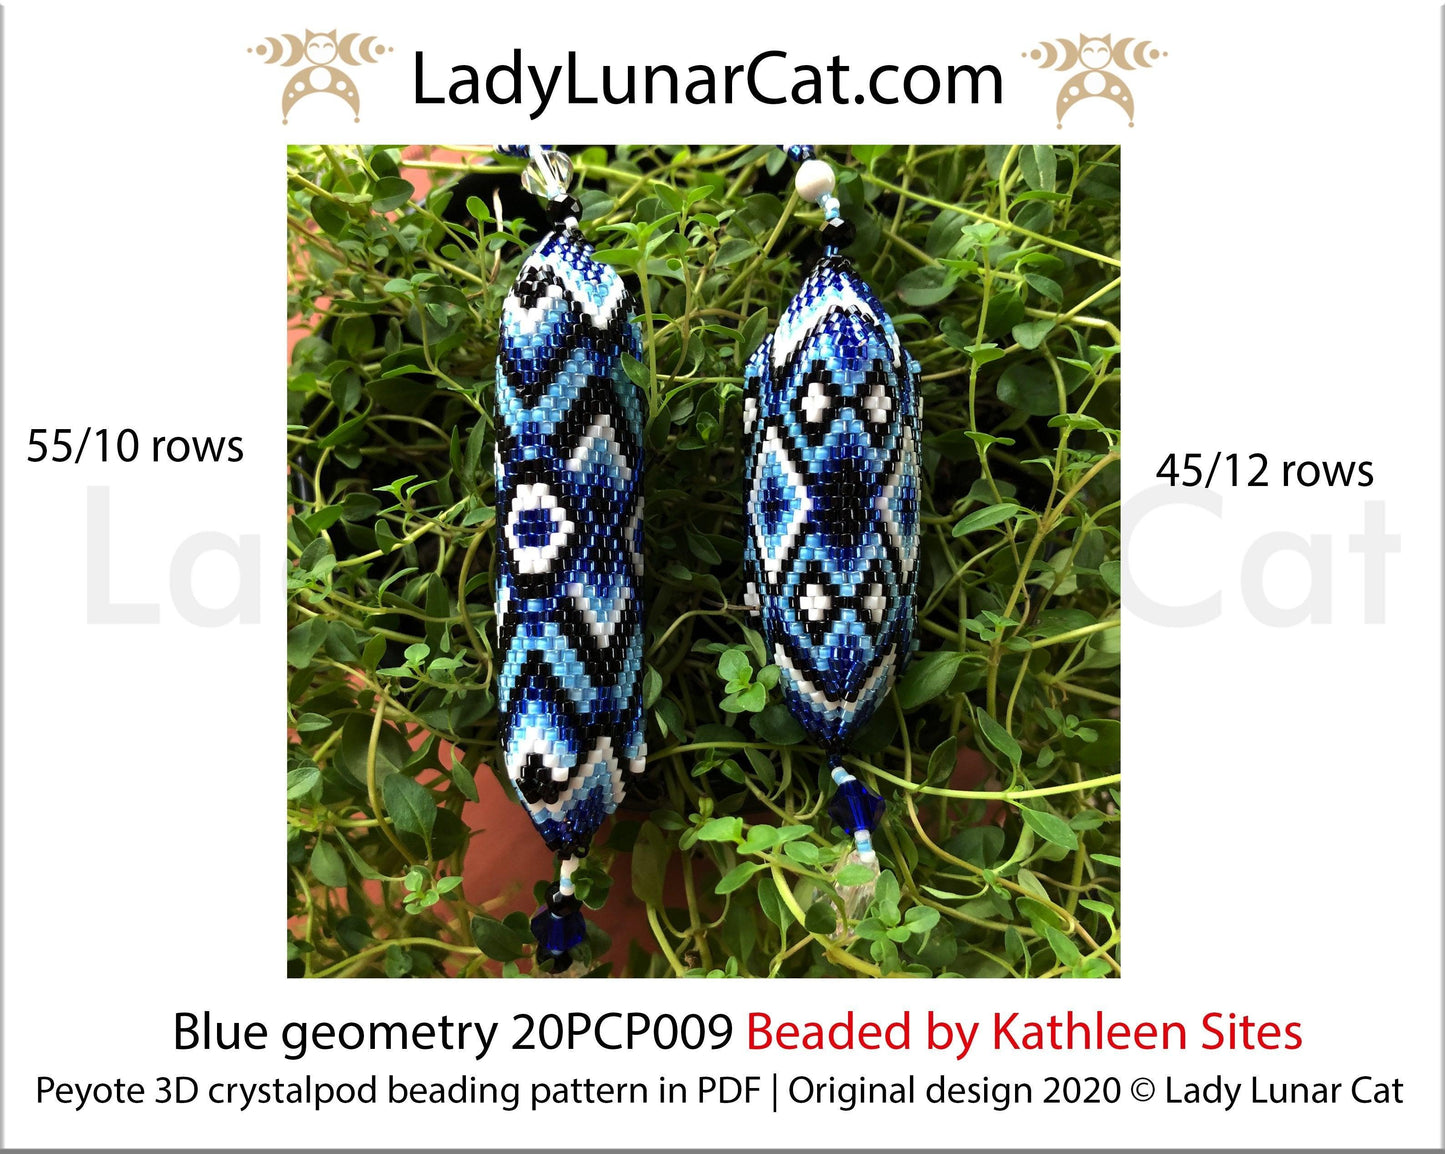 3d peyote pod pattern or crystalpod pattern for beading Blue geometry 20PCP009 LadyLunarCat